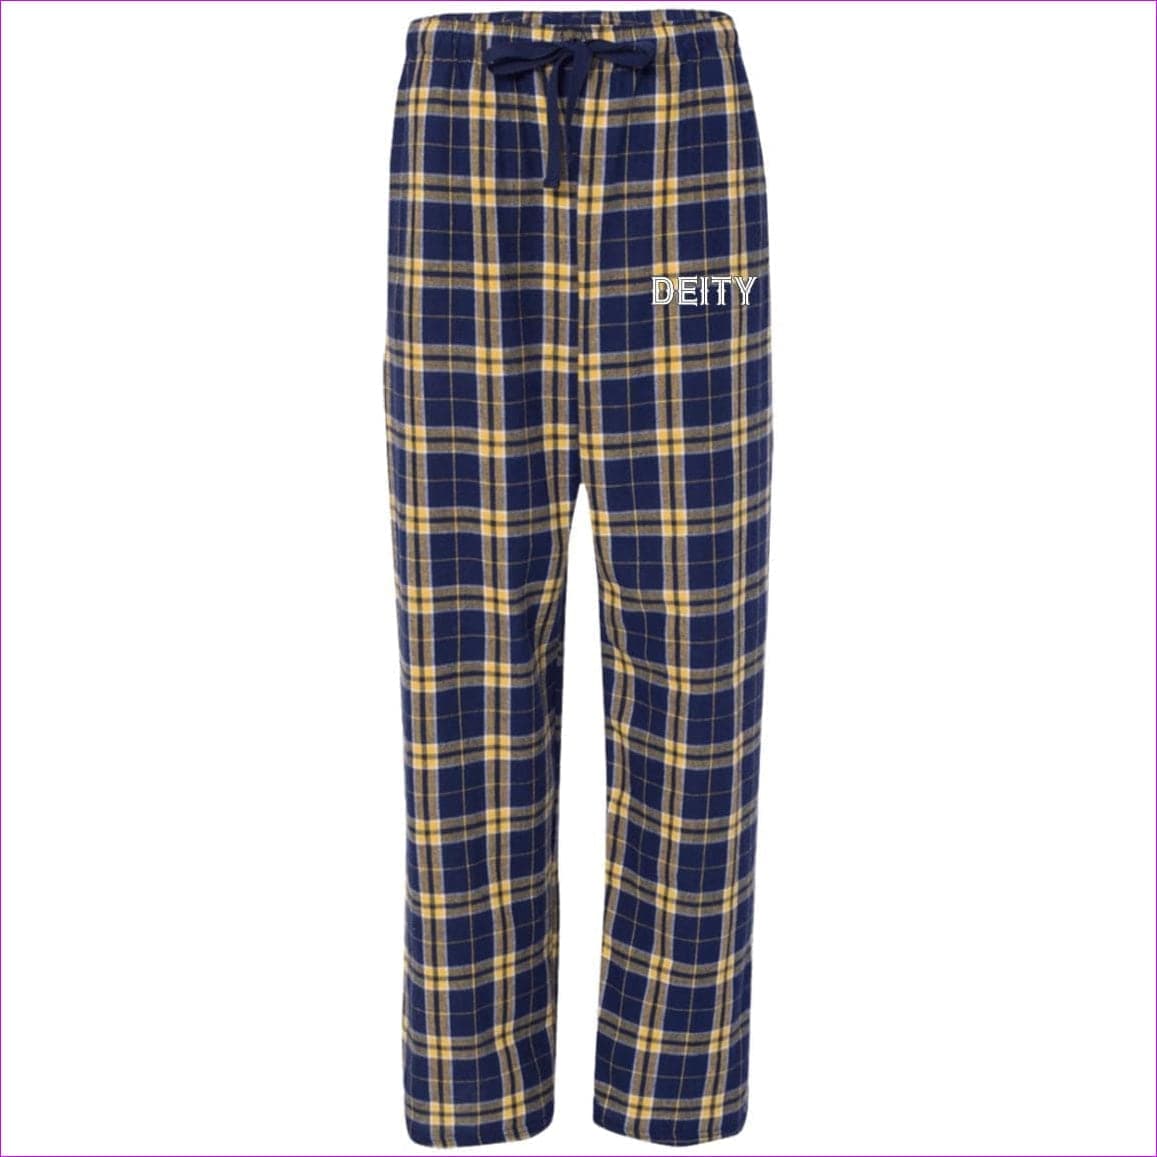 Navy/Gold - Deity Flannel Pants - unisex pajamas Pants at TFC&H Co.